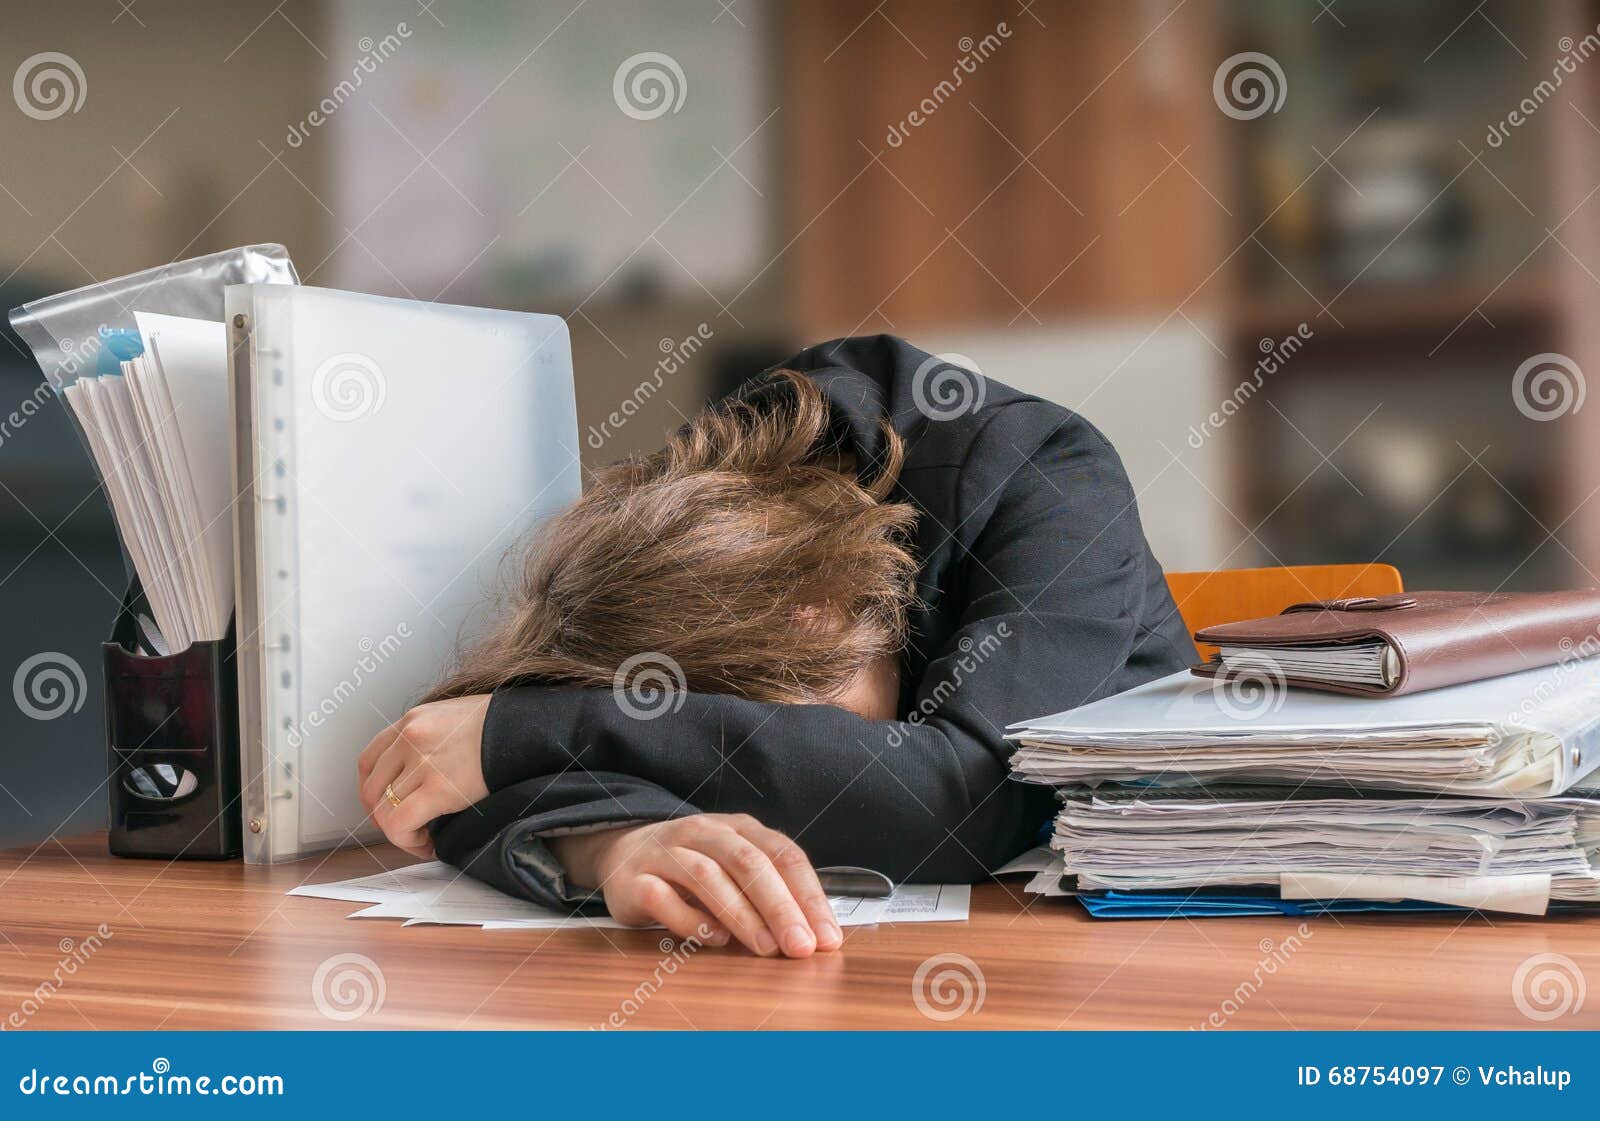 lazy-business-woman-sleeping-desk-office-68754097